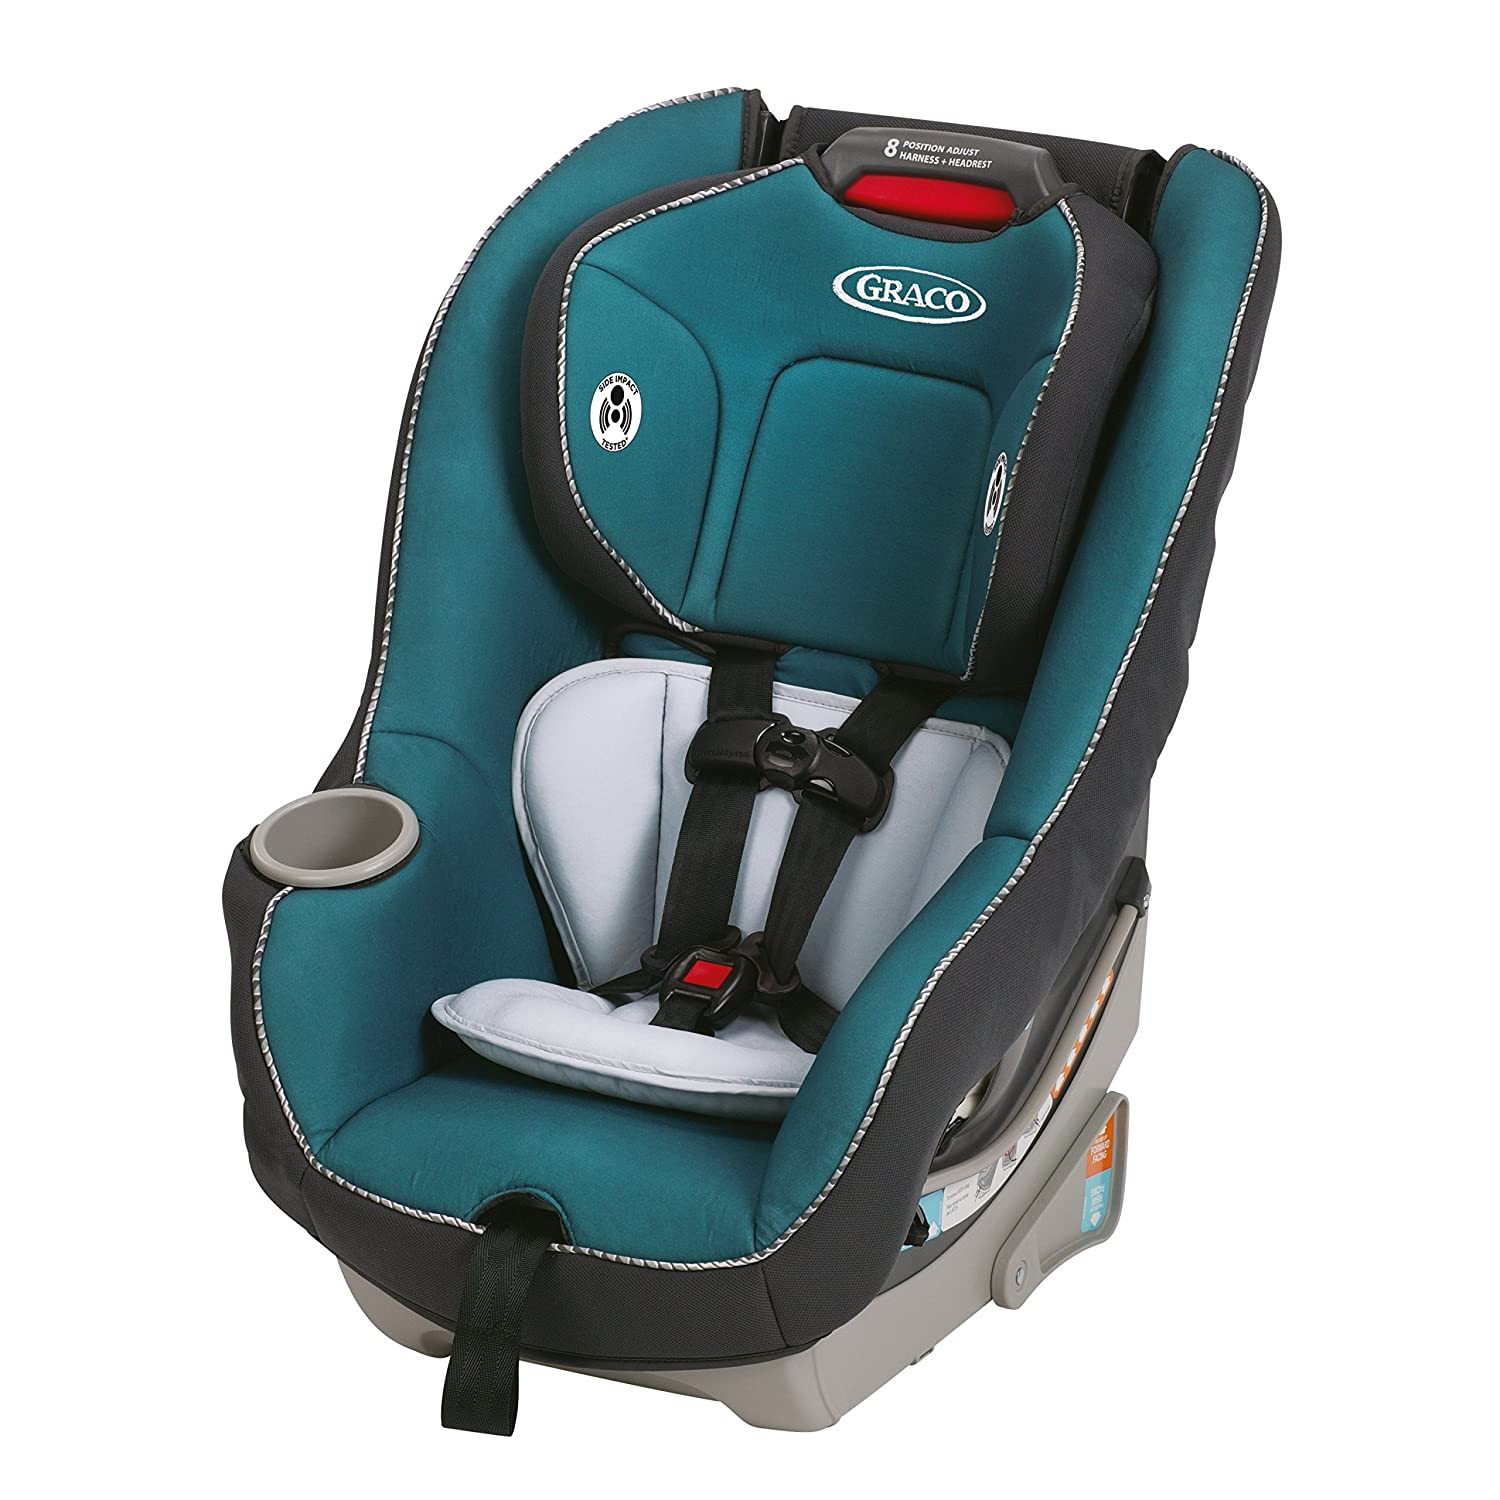 Top 4 Best Convertible Car Seat for Newborns Reviews in 2022 1